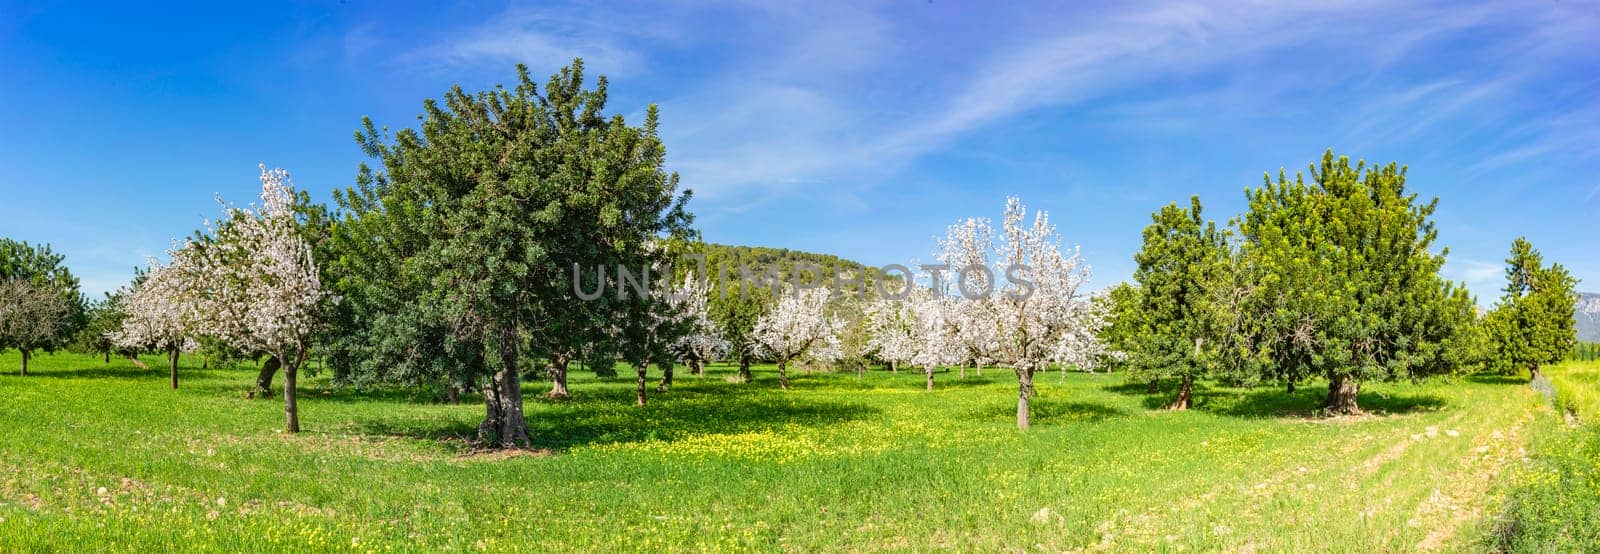 Verdant Springtime Splendor: Blossoming Almond Trees in Panoramic Orchard by Juanjo39